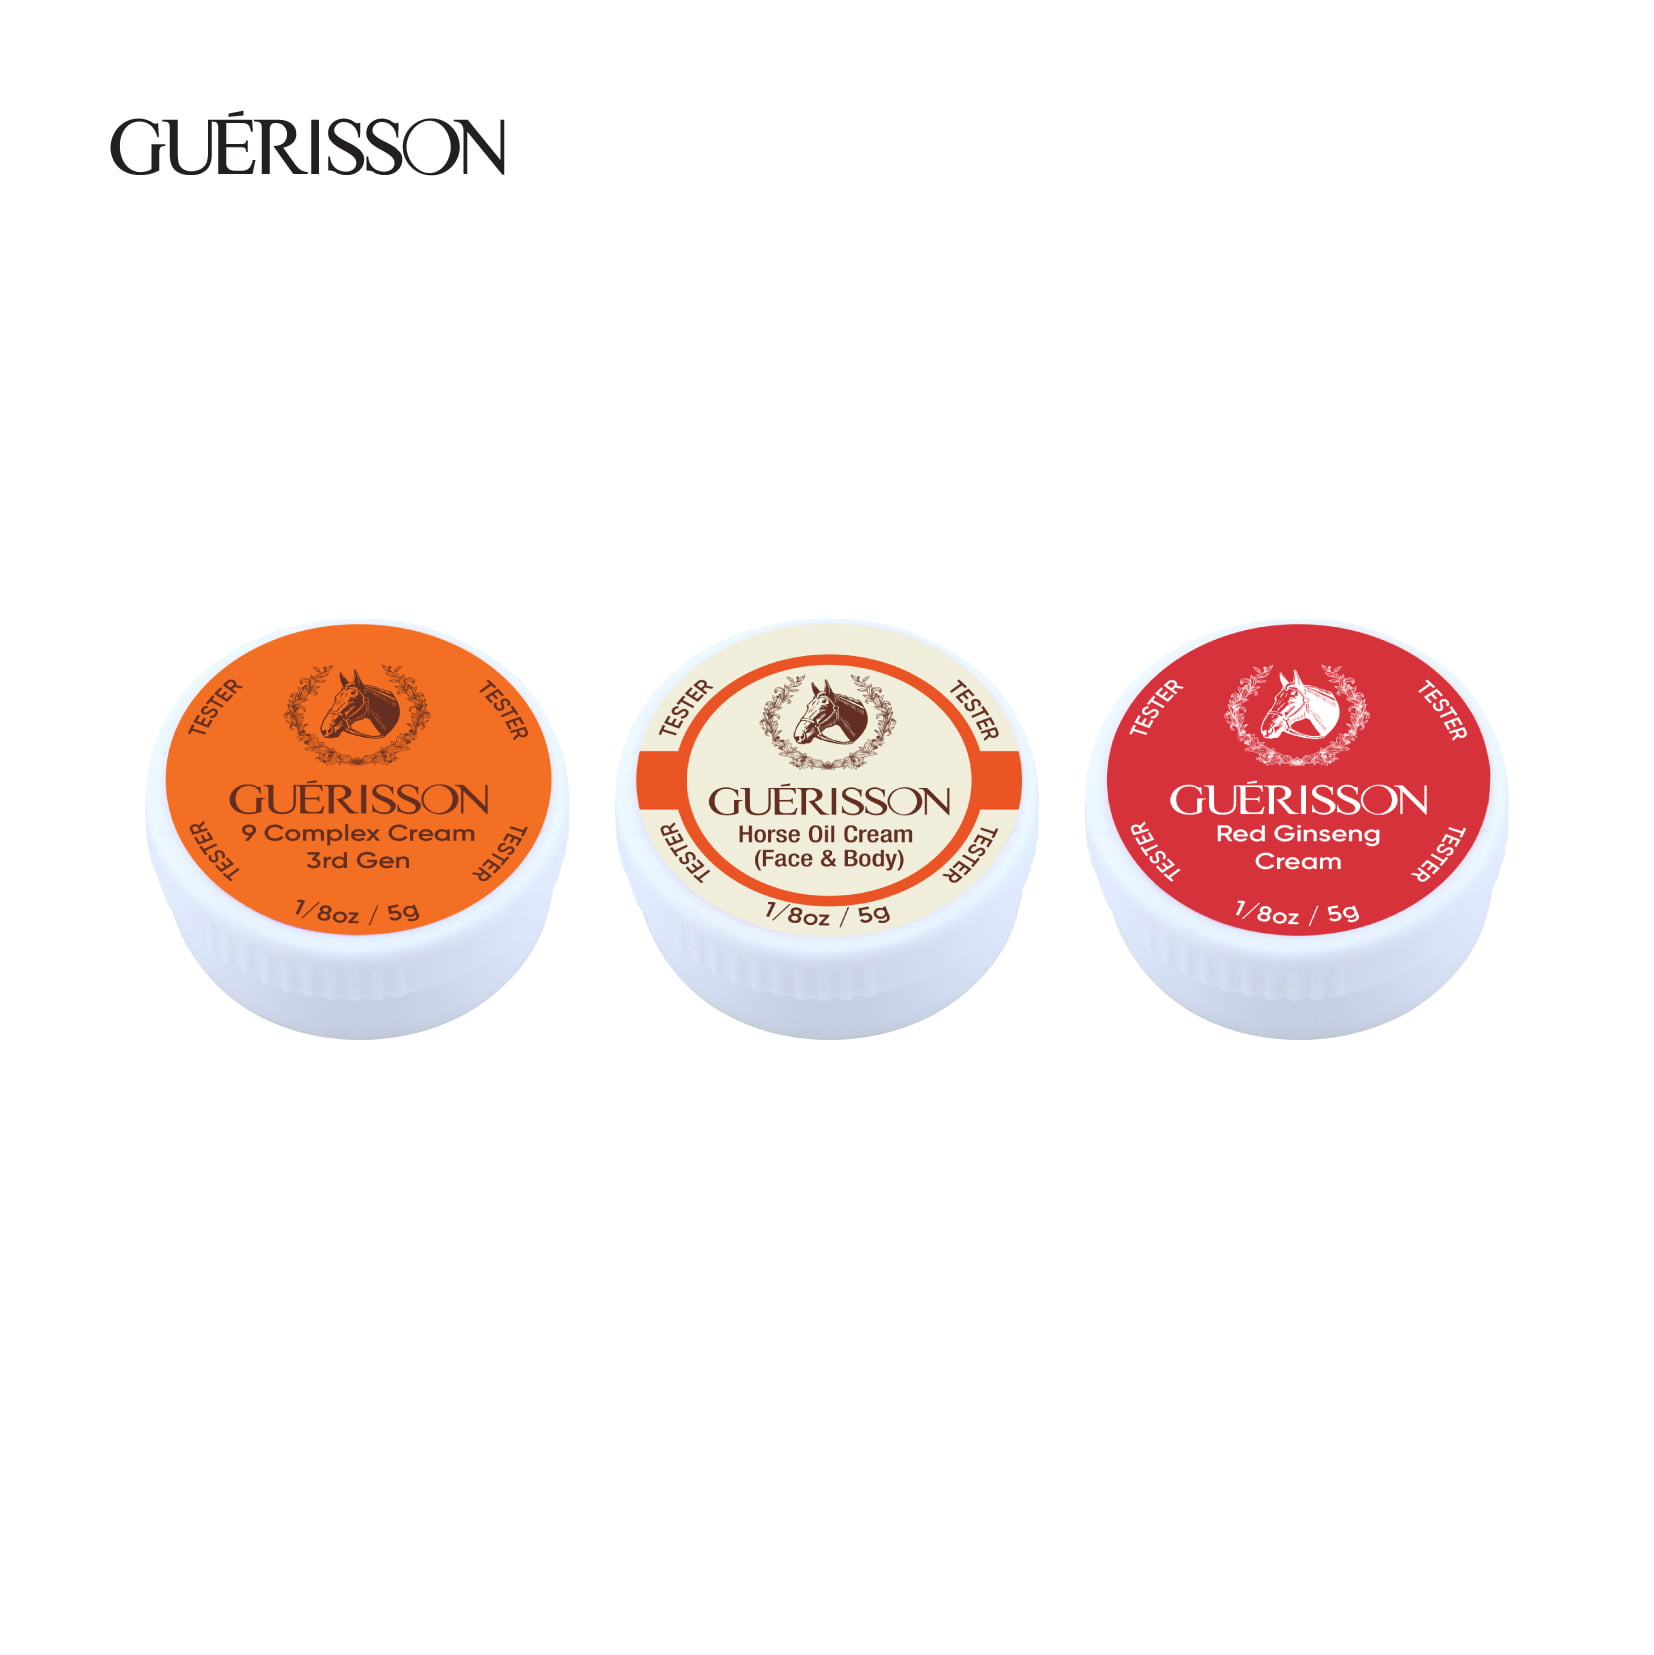 Guerisson Cream Tester (5g) (3 Types)